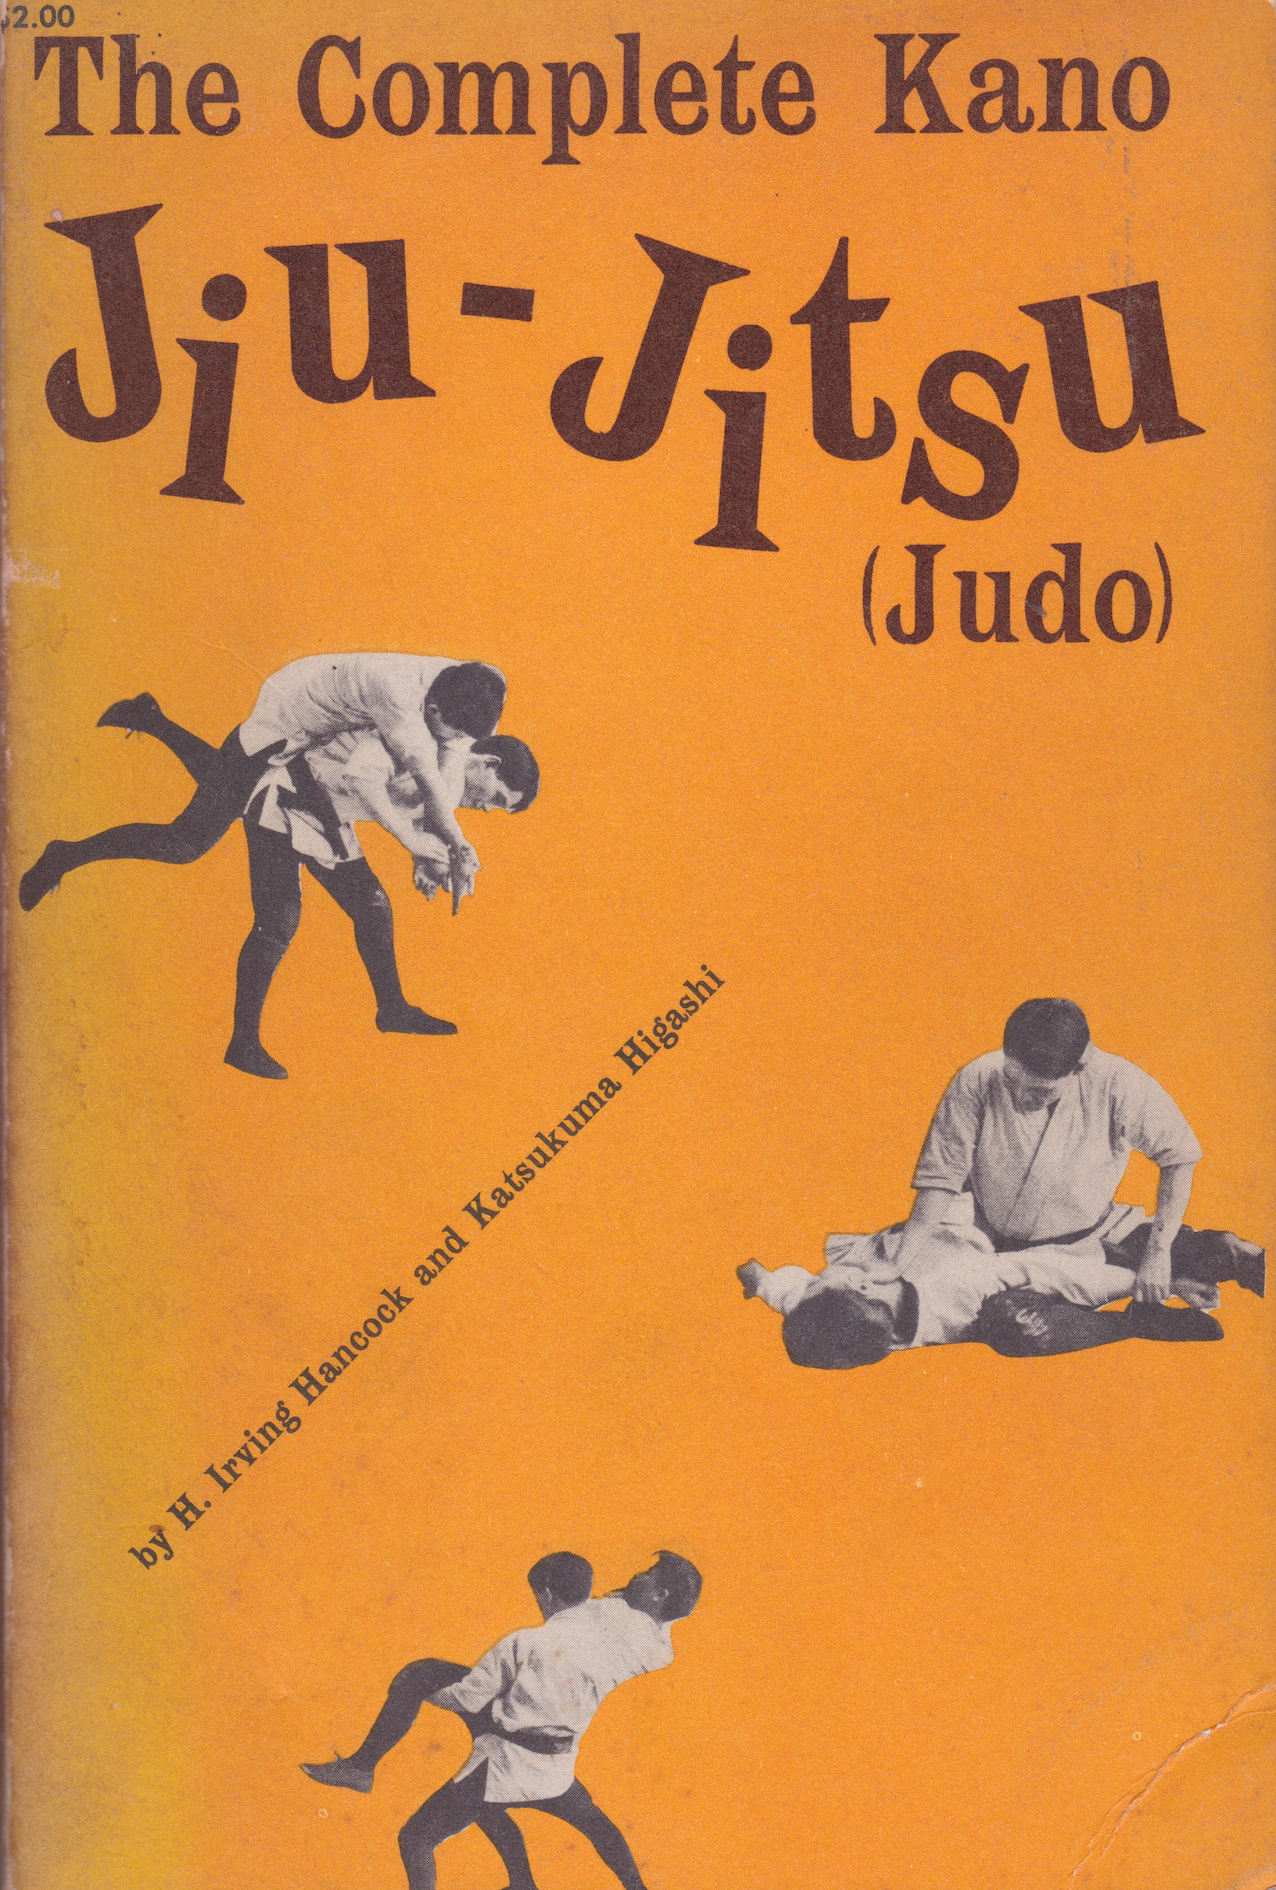 El libro completo de Kano Jiu-Jitsu (Judo) de H Irving Hancock y Katsukuma Higashi (usado)